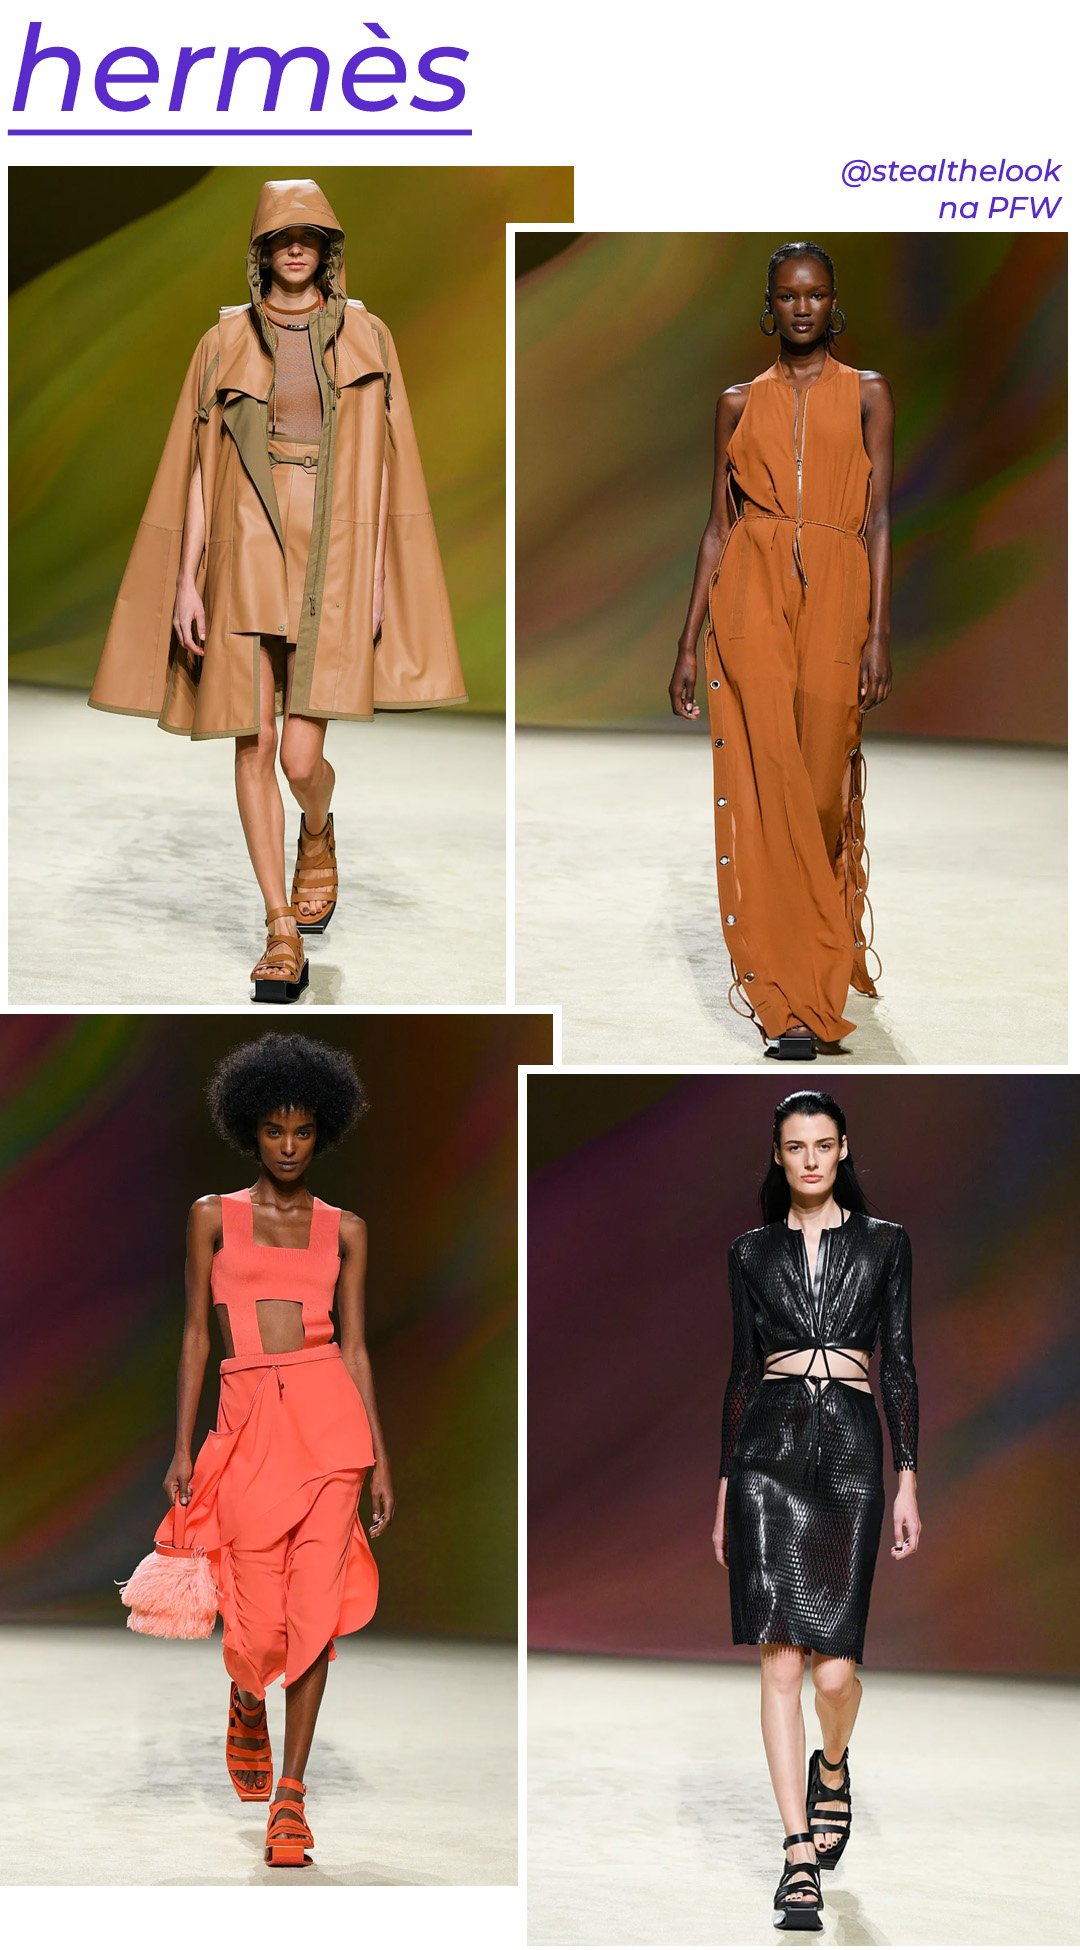 Hermès S/S 2023 - roupas diversas - Paris Fashion Week - Primavera - modelo andando pela passarela - https://stealthelook.com.br